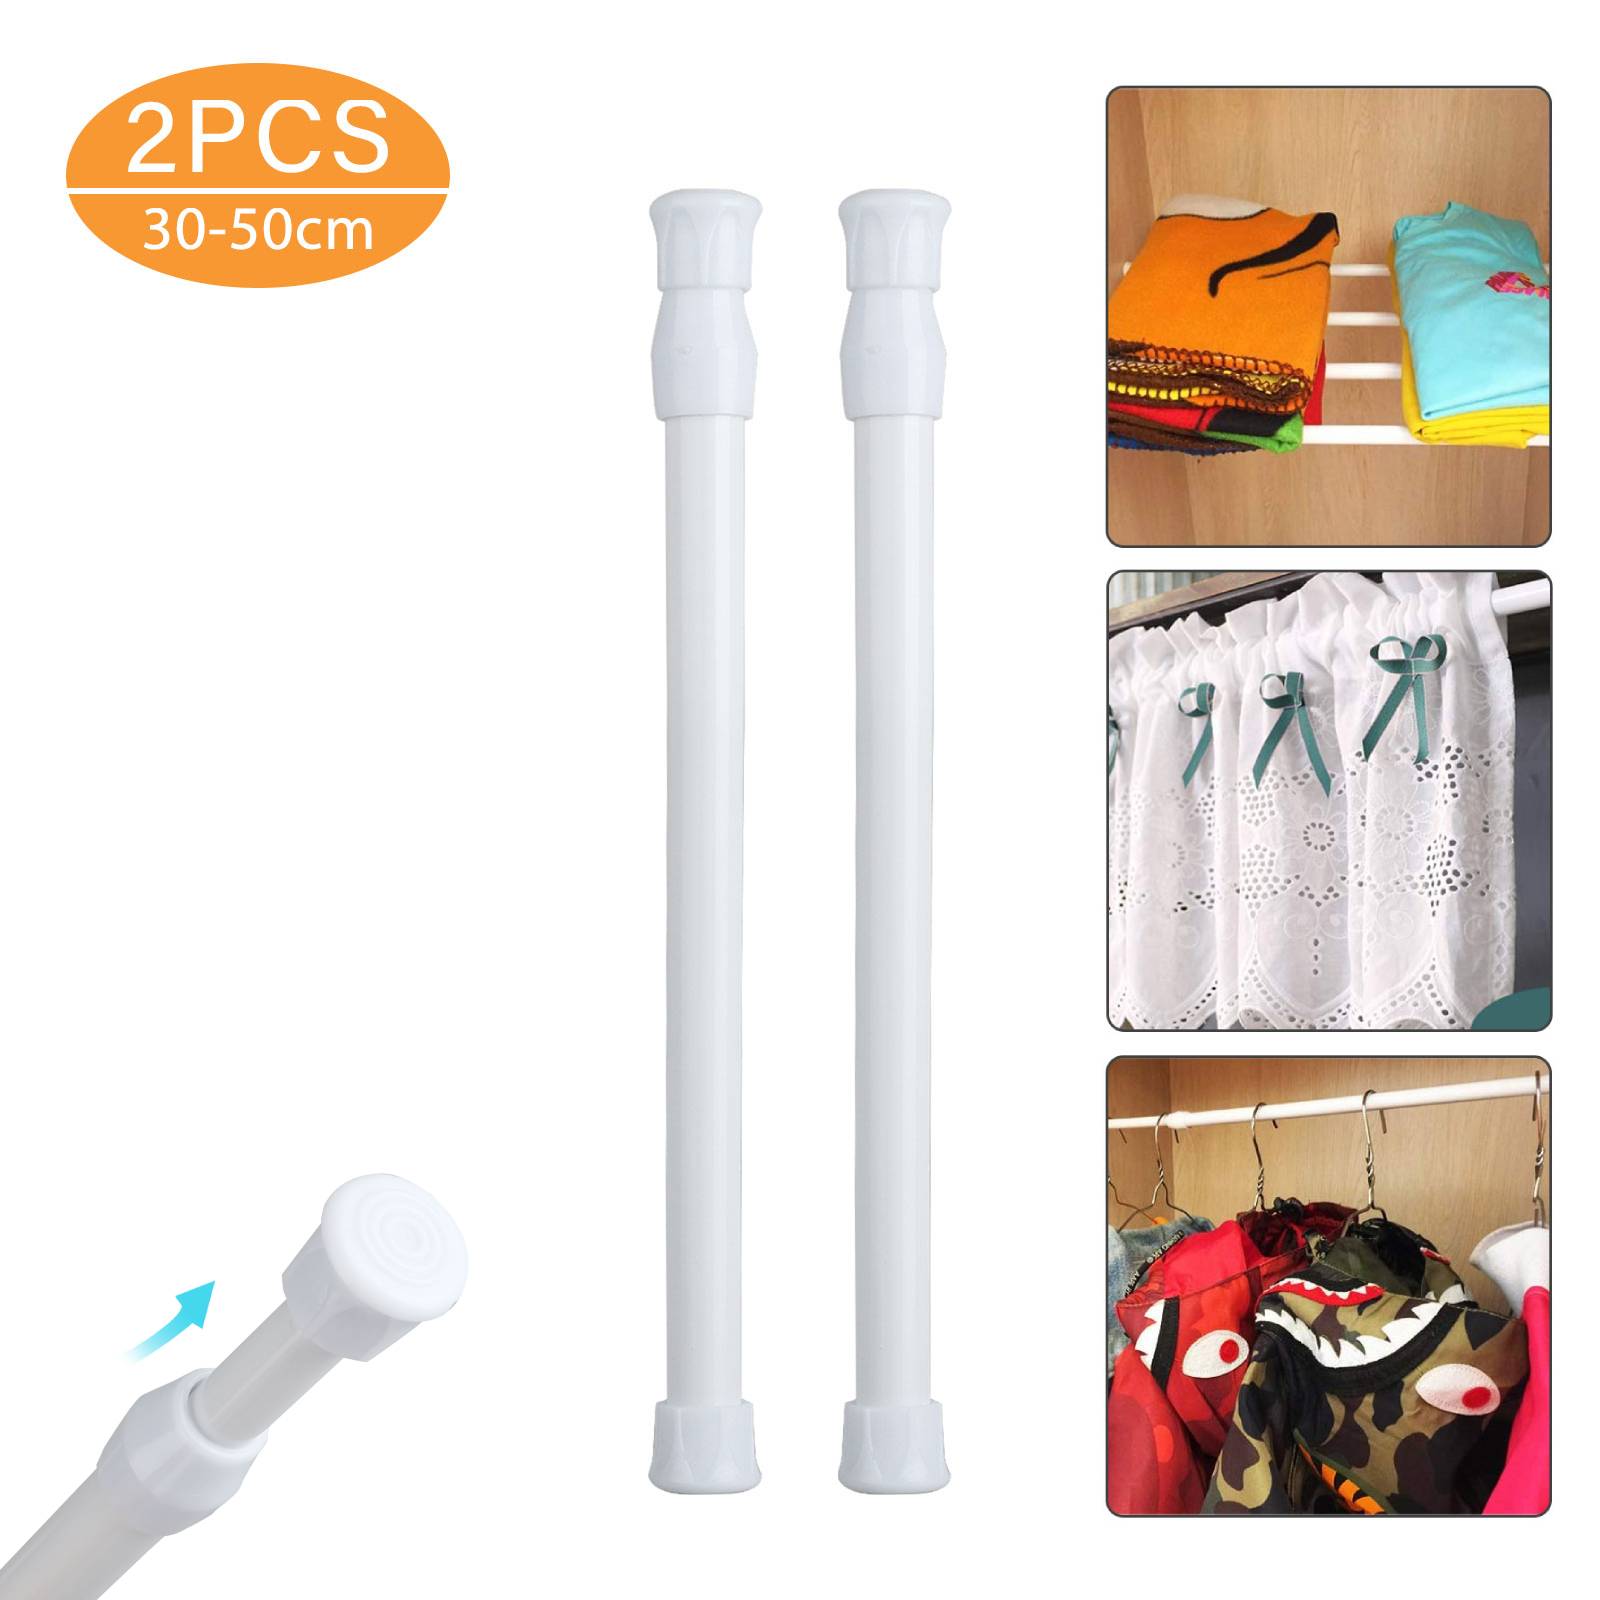 2Pcs Strong Adjustable Extendable Curtain Rail Rod Wardrobe Clothes Poles #2 